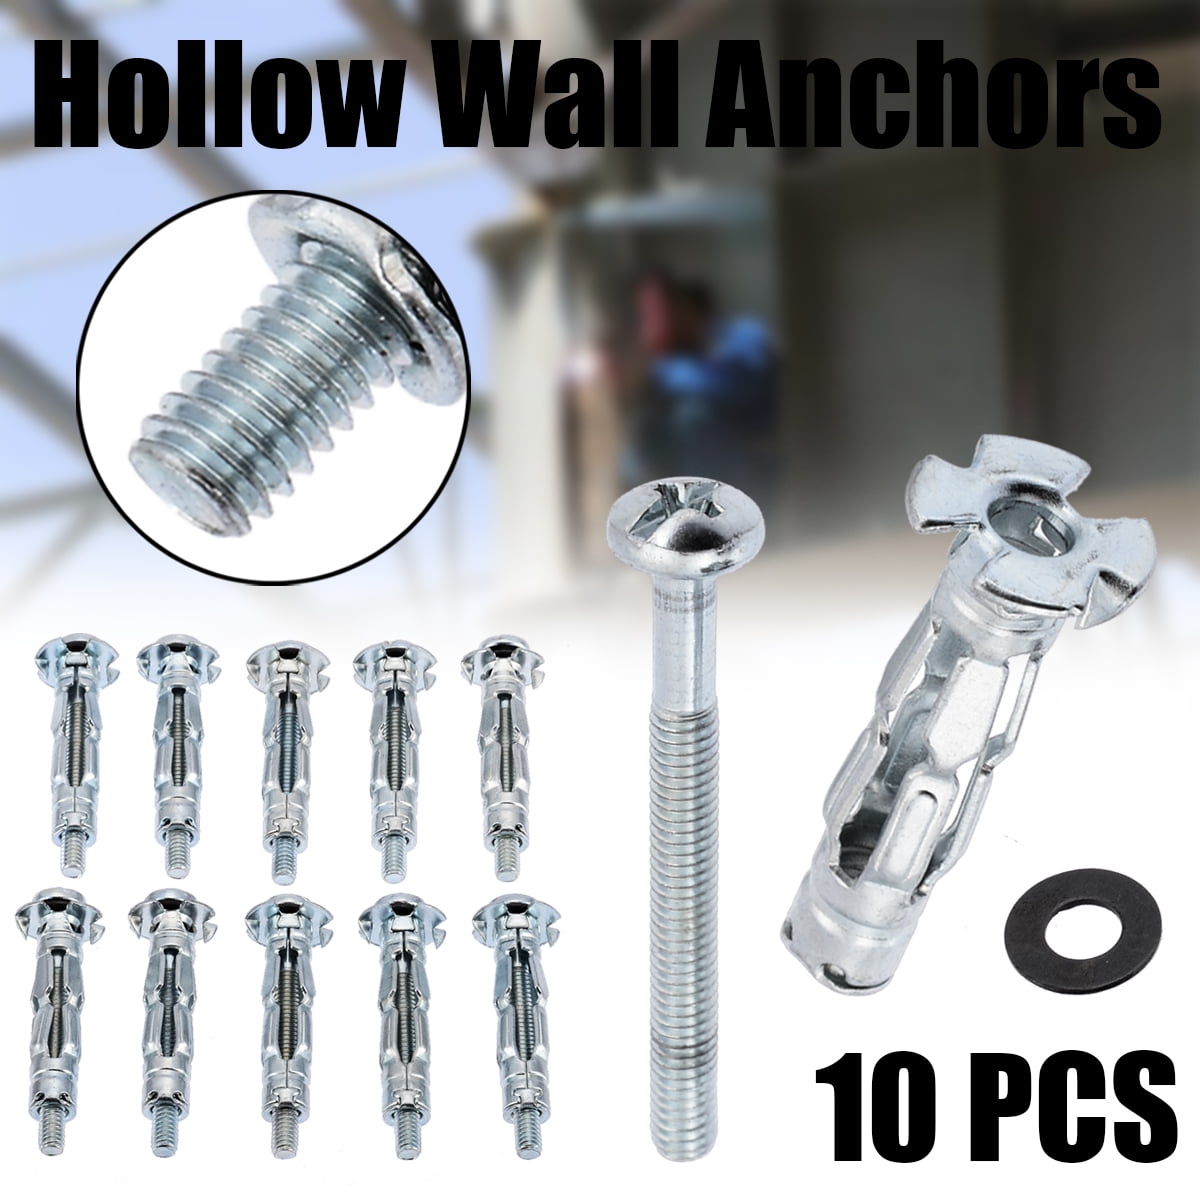 4 Pak 25 Ea Zinc-Plated Steel Hollow Wall Anchors #6-32 x 2 3/8 in w/ TrussHead 